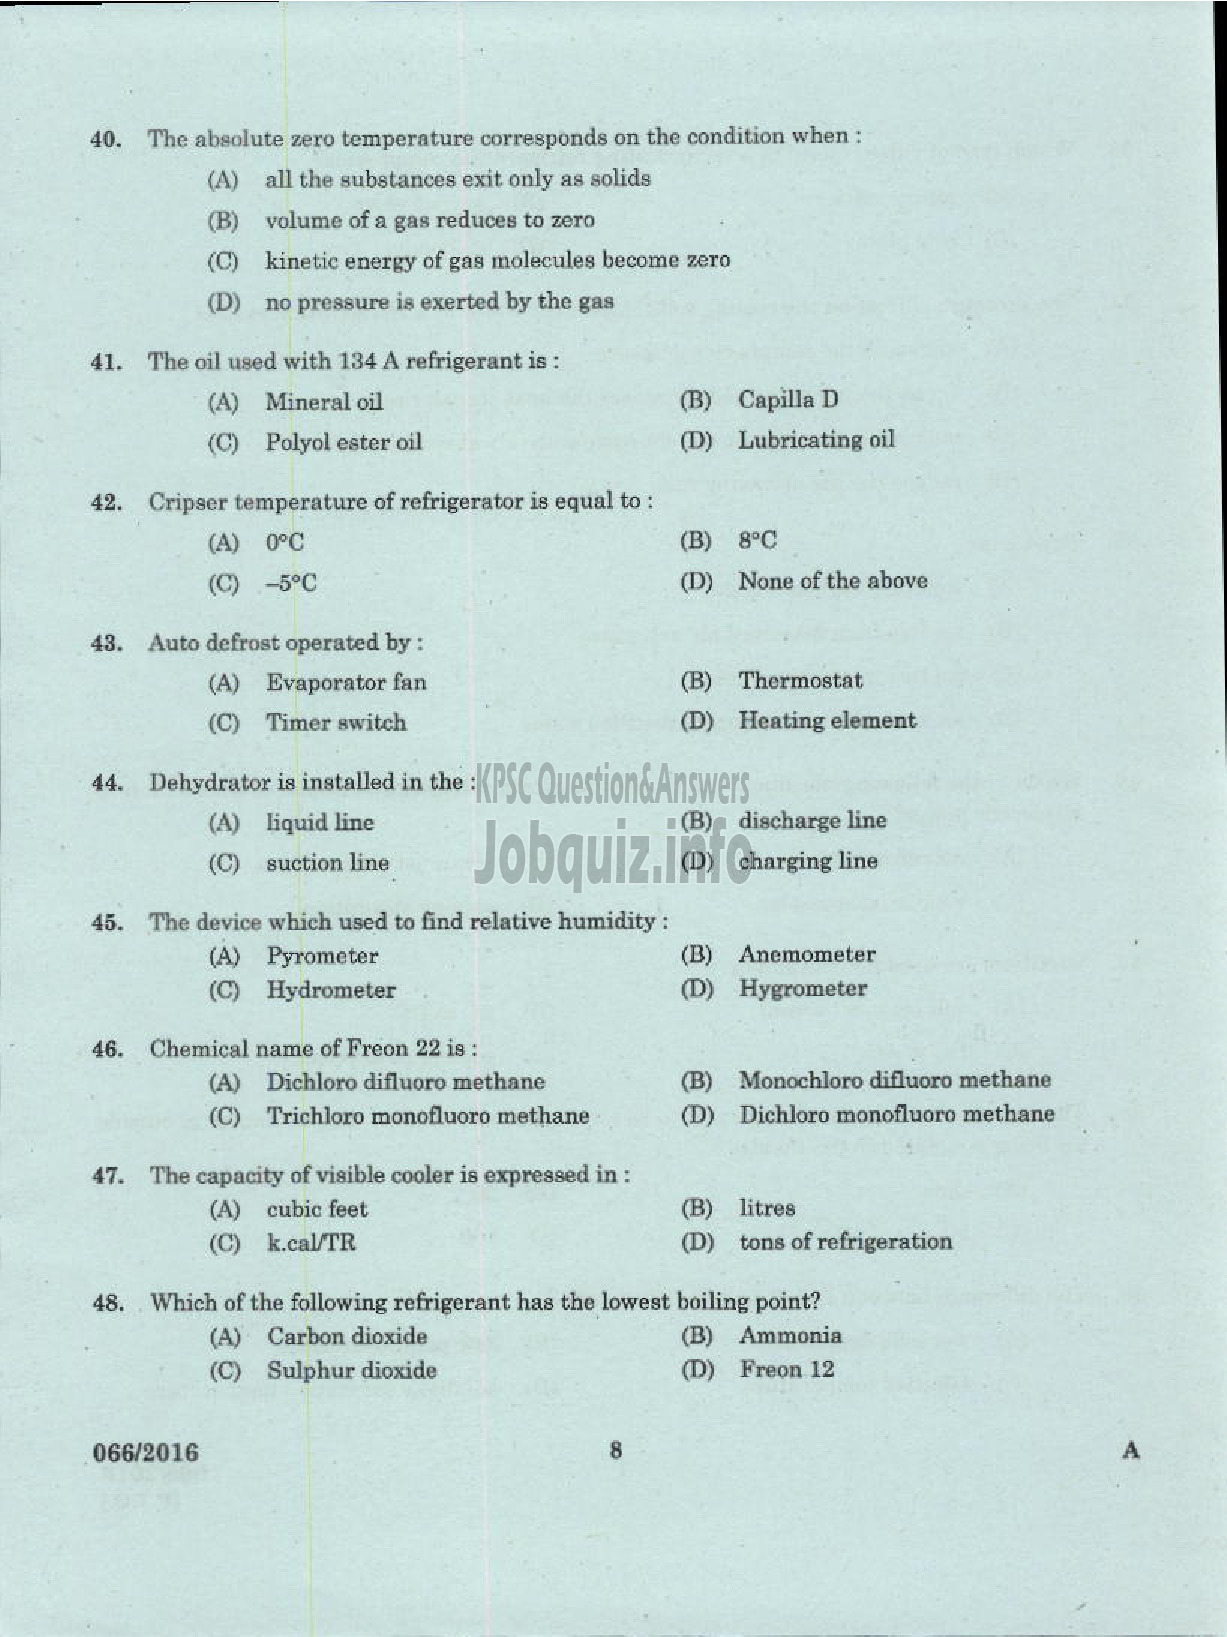 Kerala PSC Question Paper - REFRIGERATION MECHANIC UIP HEALTH SERVICES-6